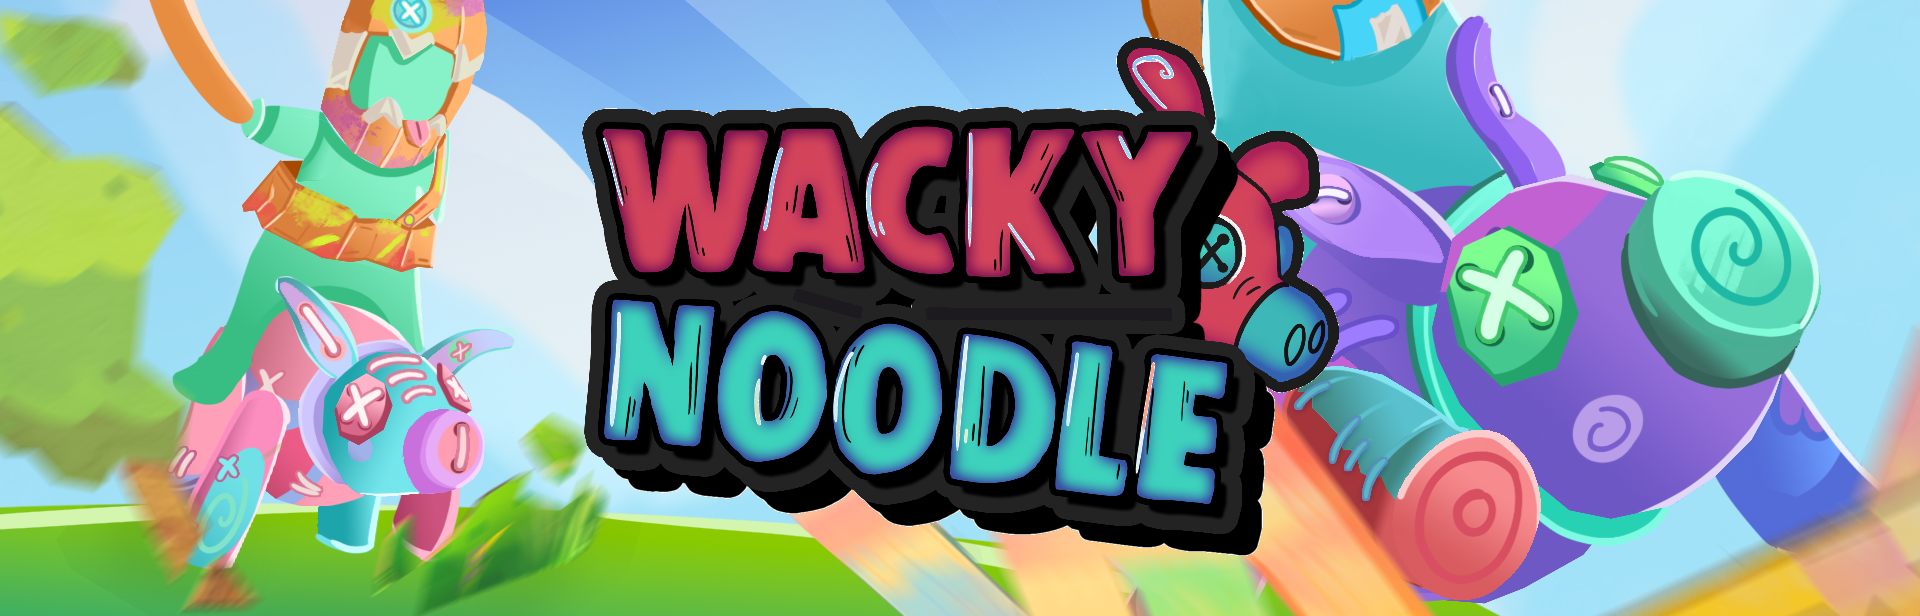 Wacky Noodle